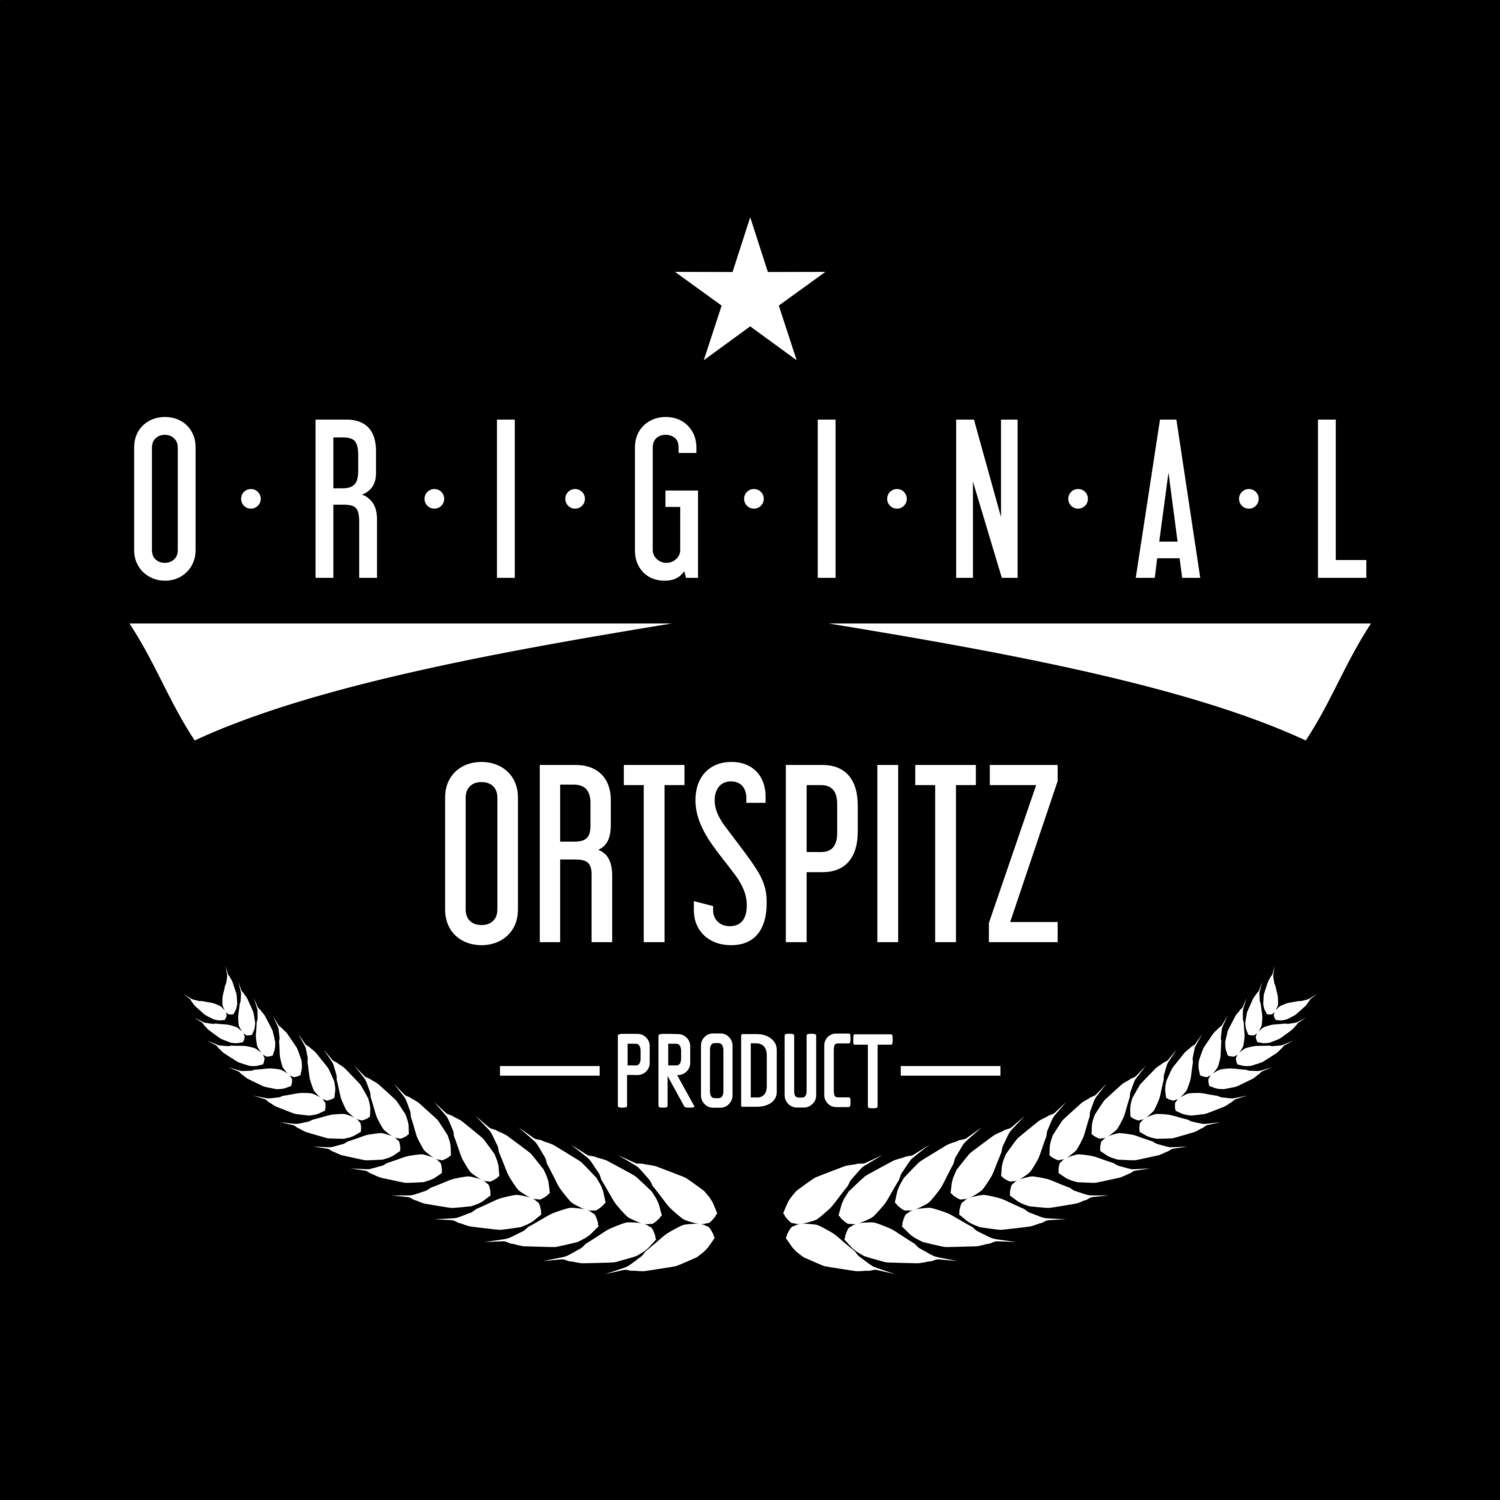 Ortspitz T-Shirt »Original Product«